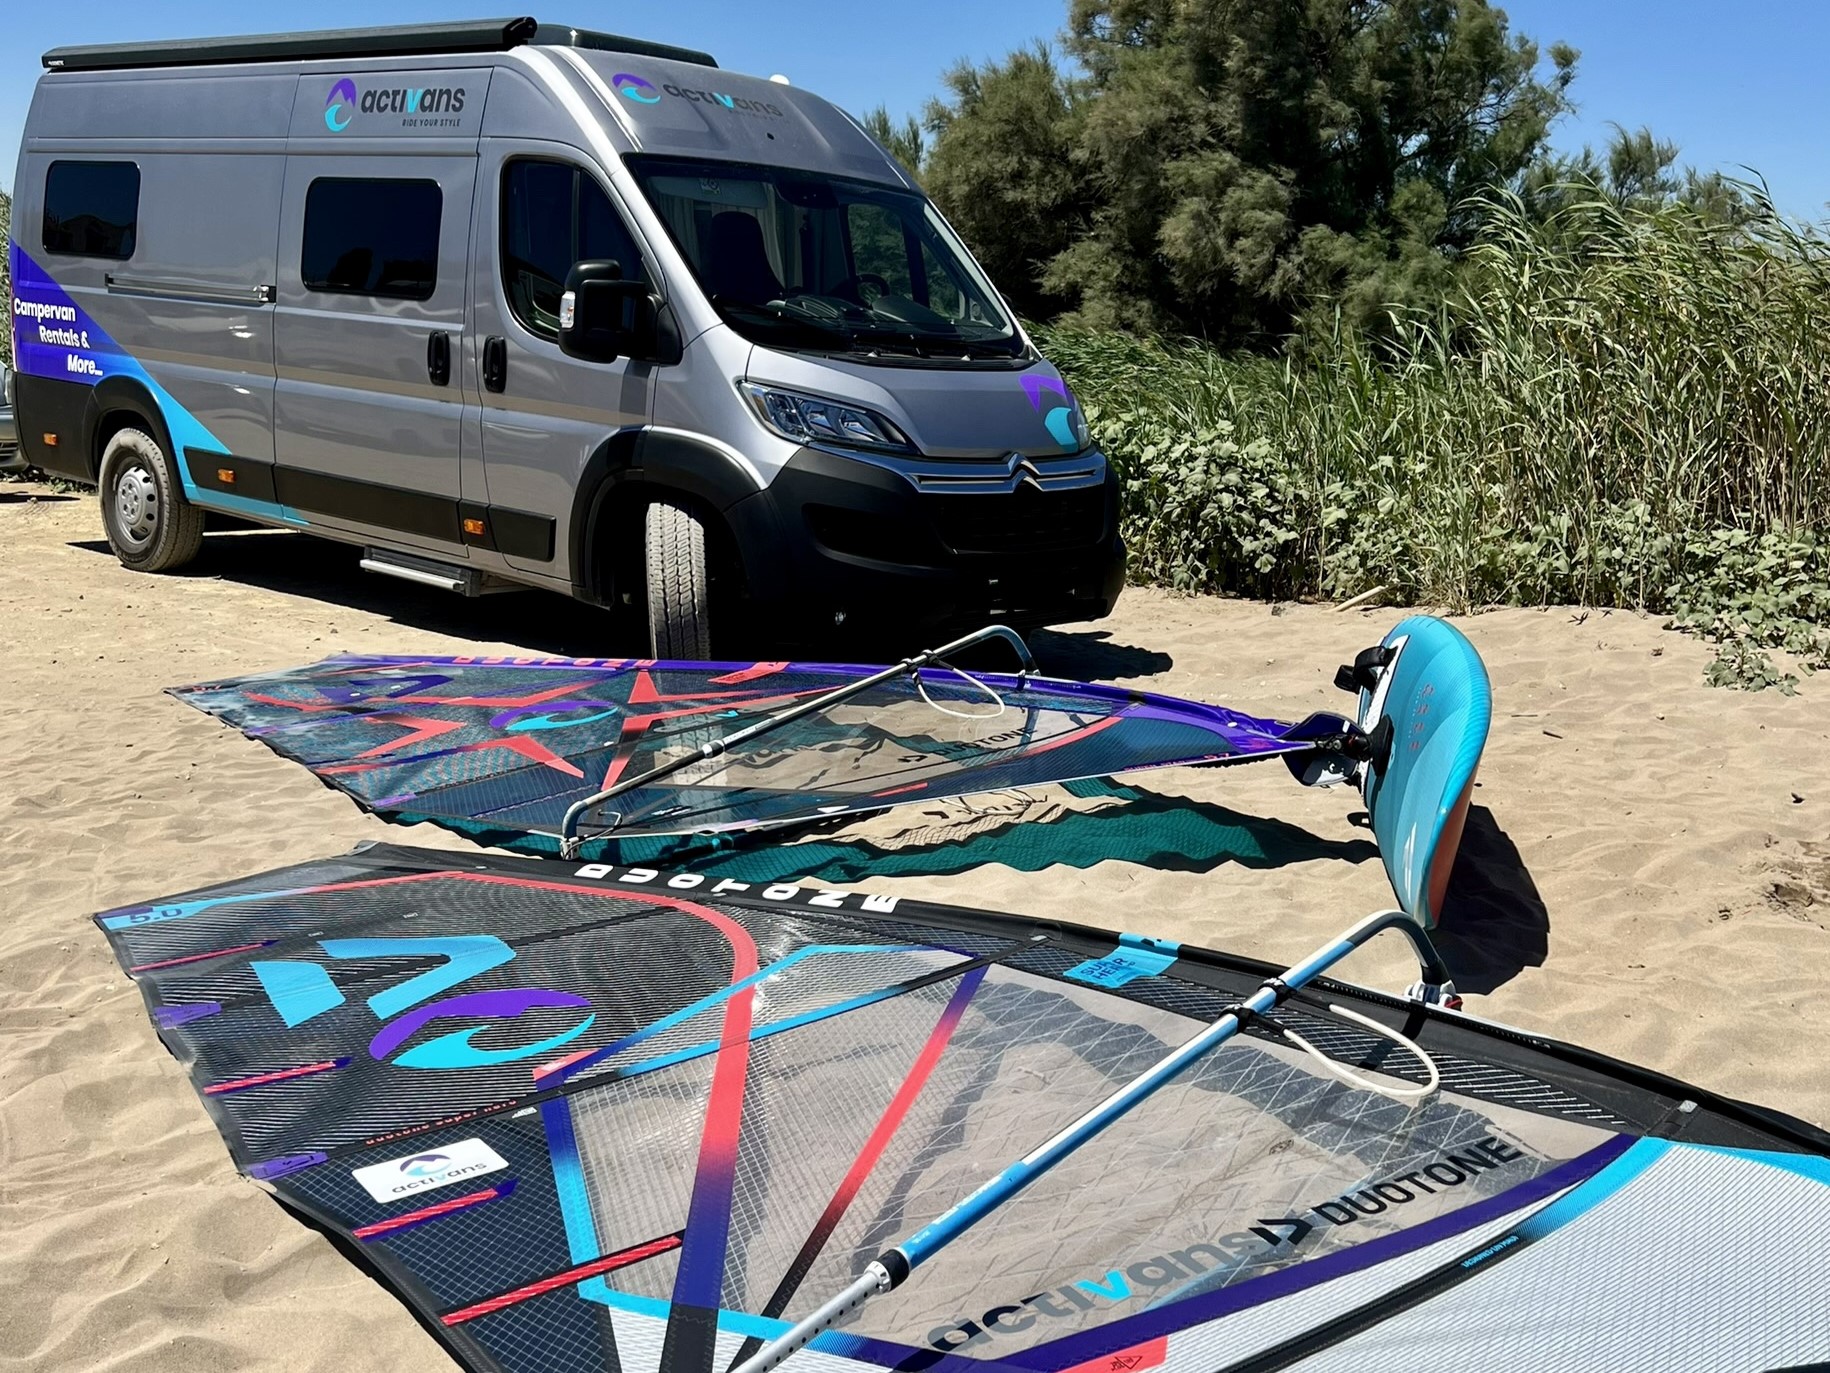 Campervan and windsurf equipment rental in Spain with Activans